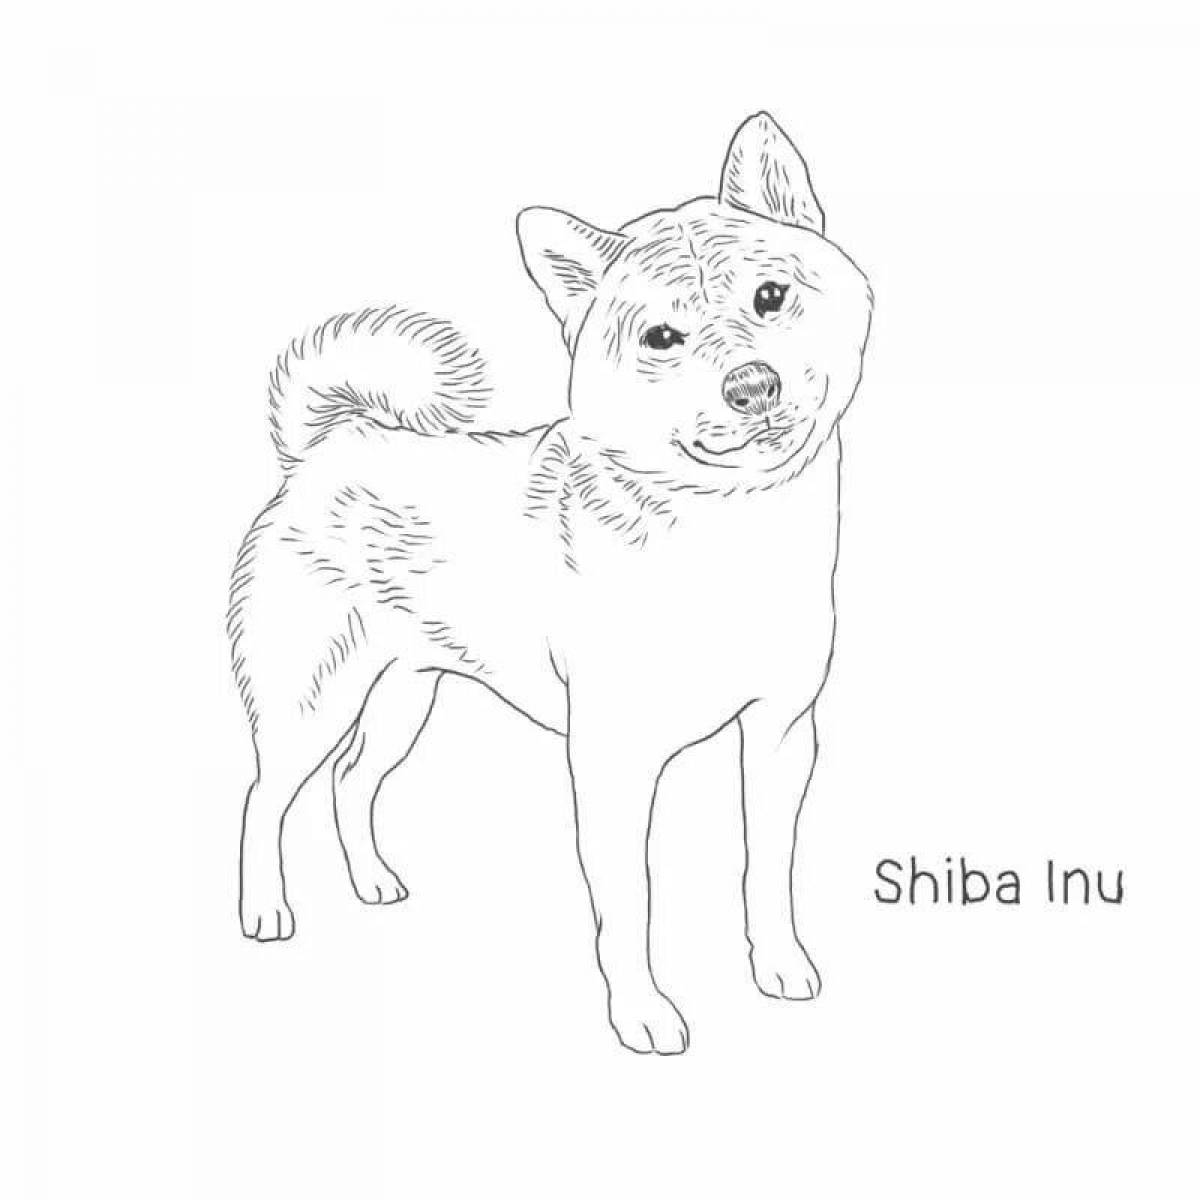 A fun shiba inu coloring page